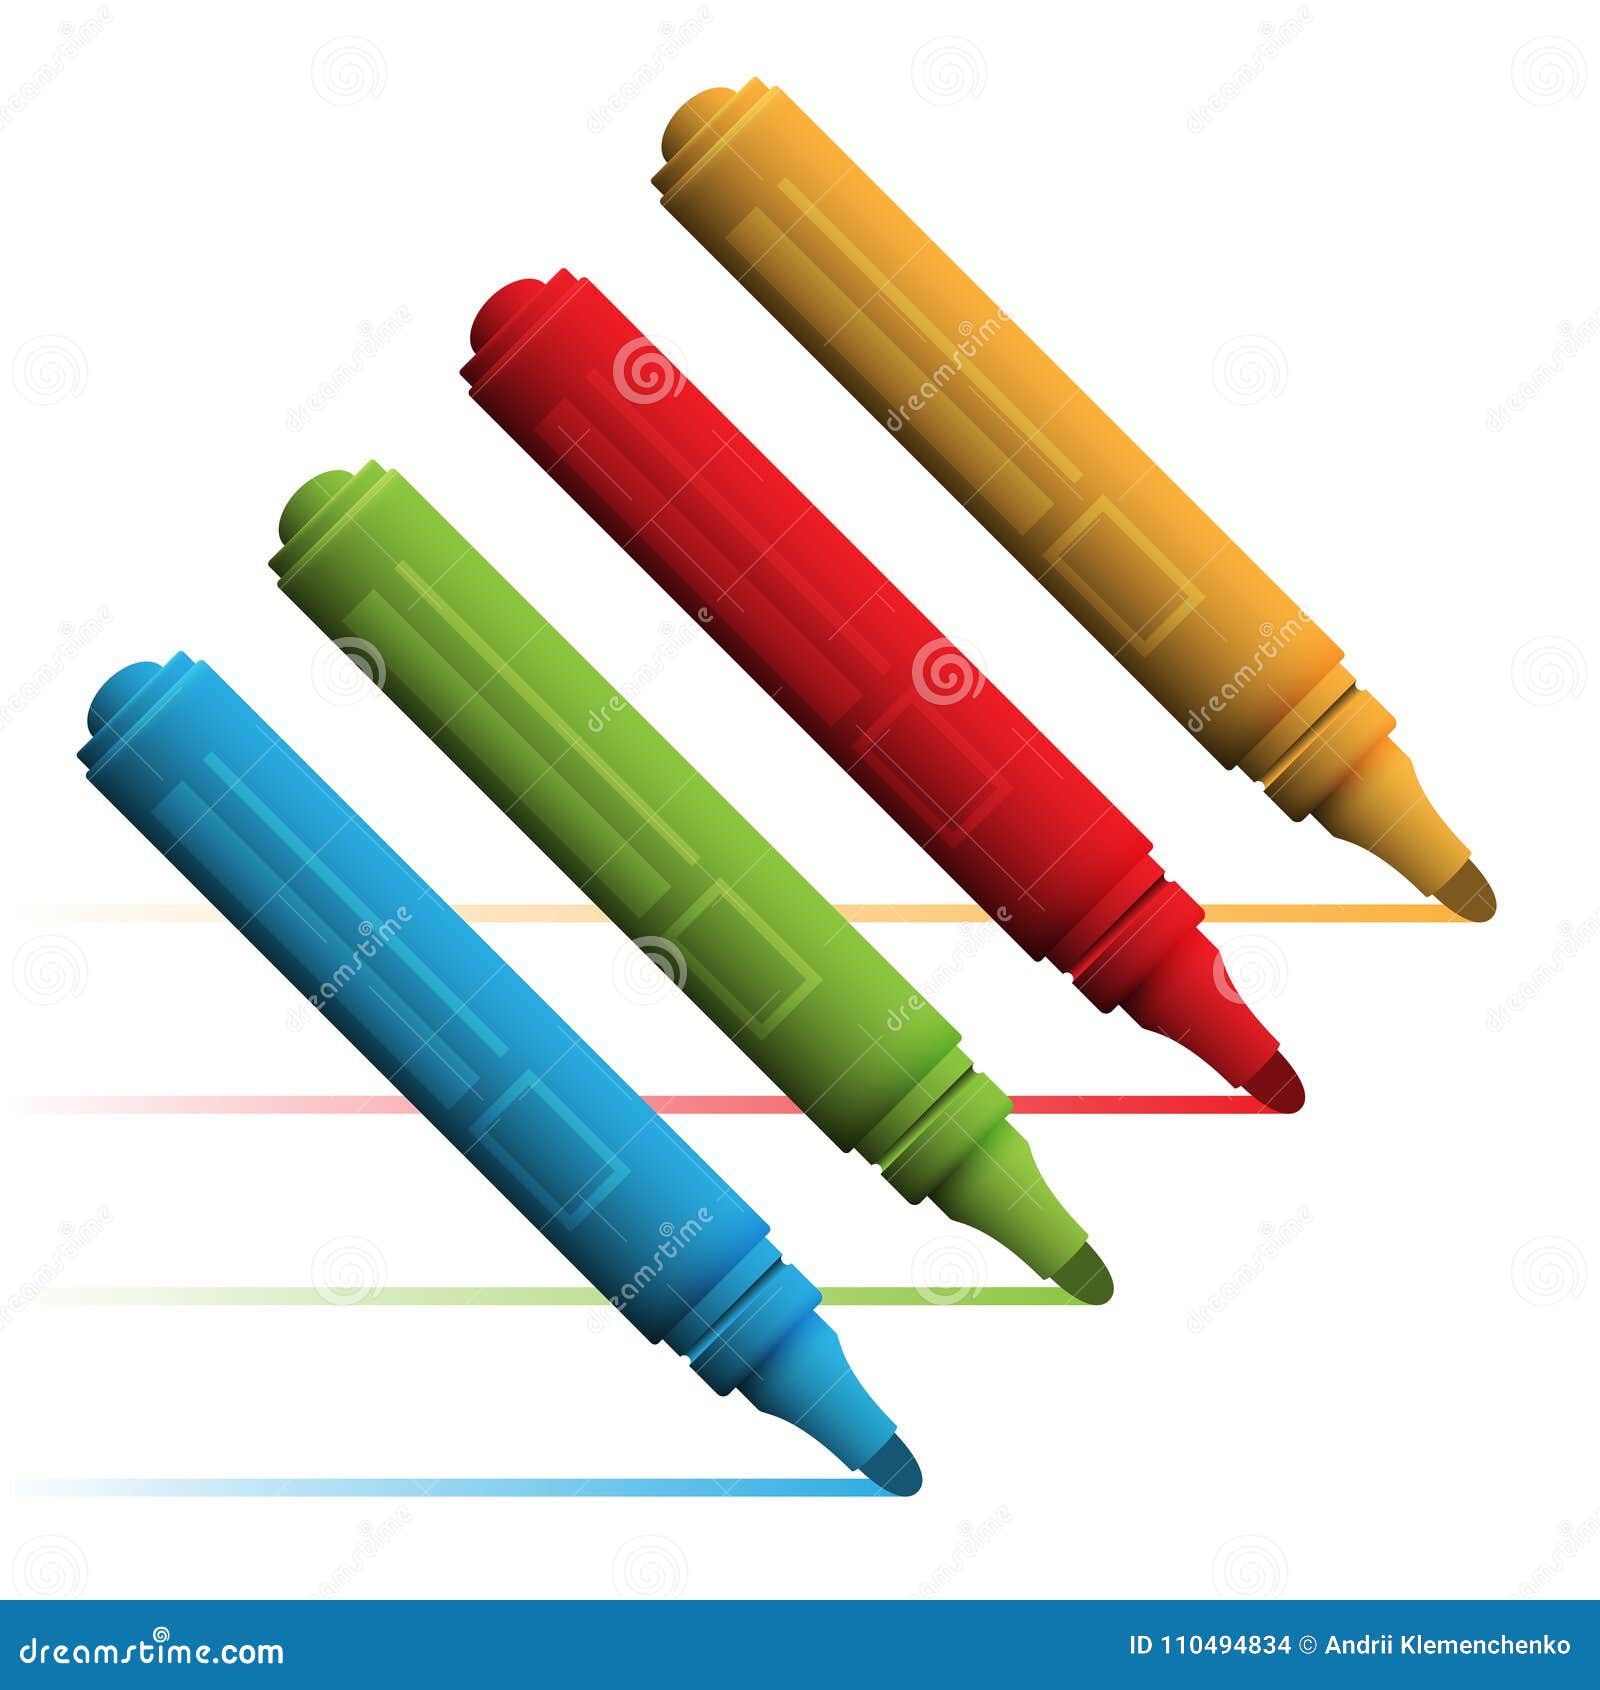 https://thumbs.dreamstime.com/z/colorful-felt-pen-markers-isolated-white-background-set-color-school-children-sale-vector-illustration-colored-110494834.jpg